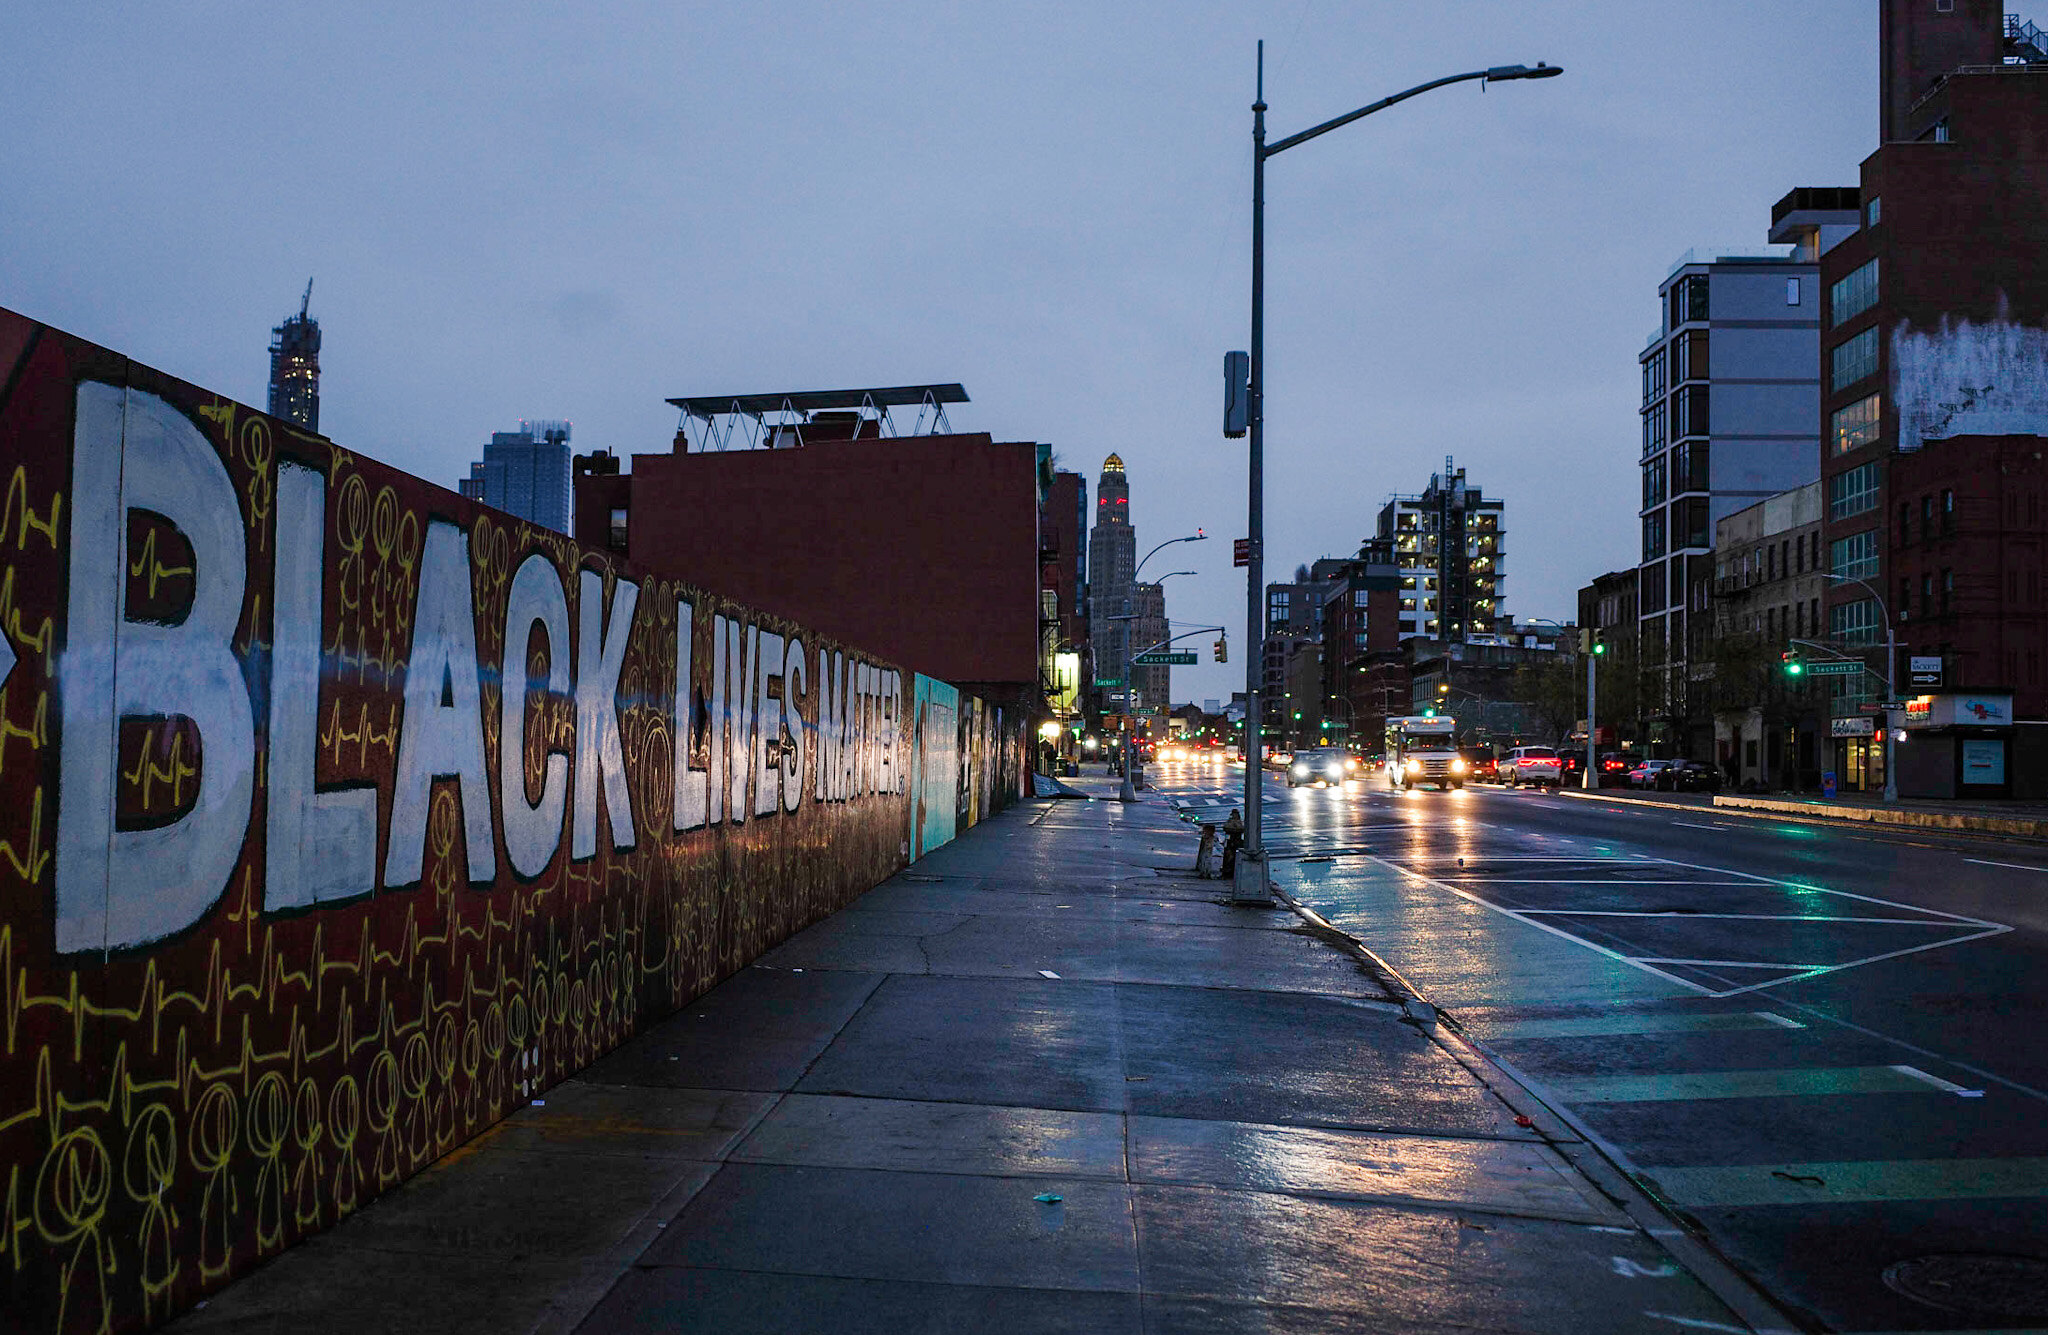 A picture of Black Lives Matter graffiti in Brooklyn